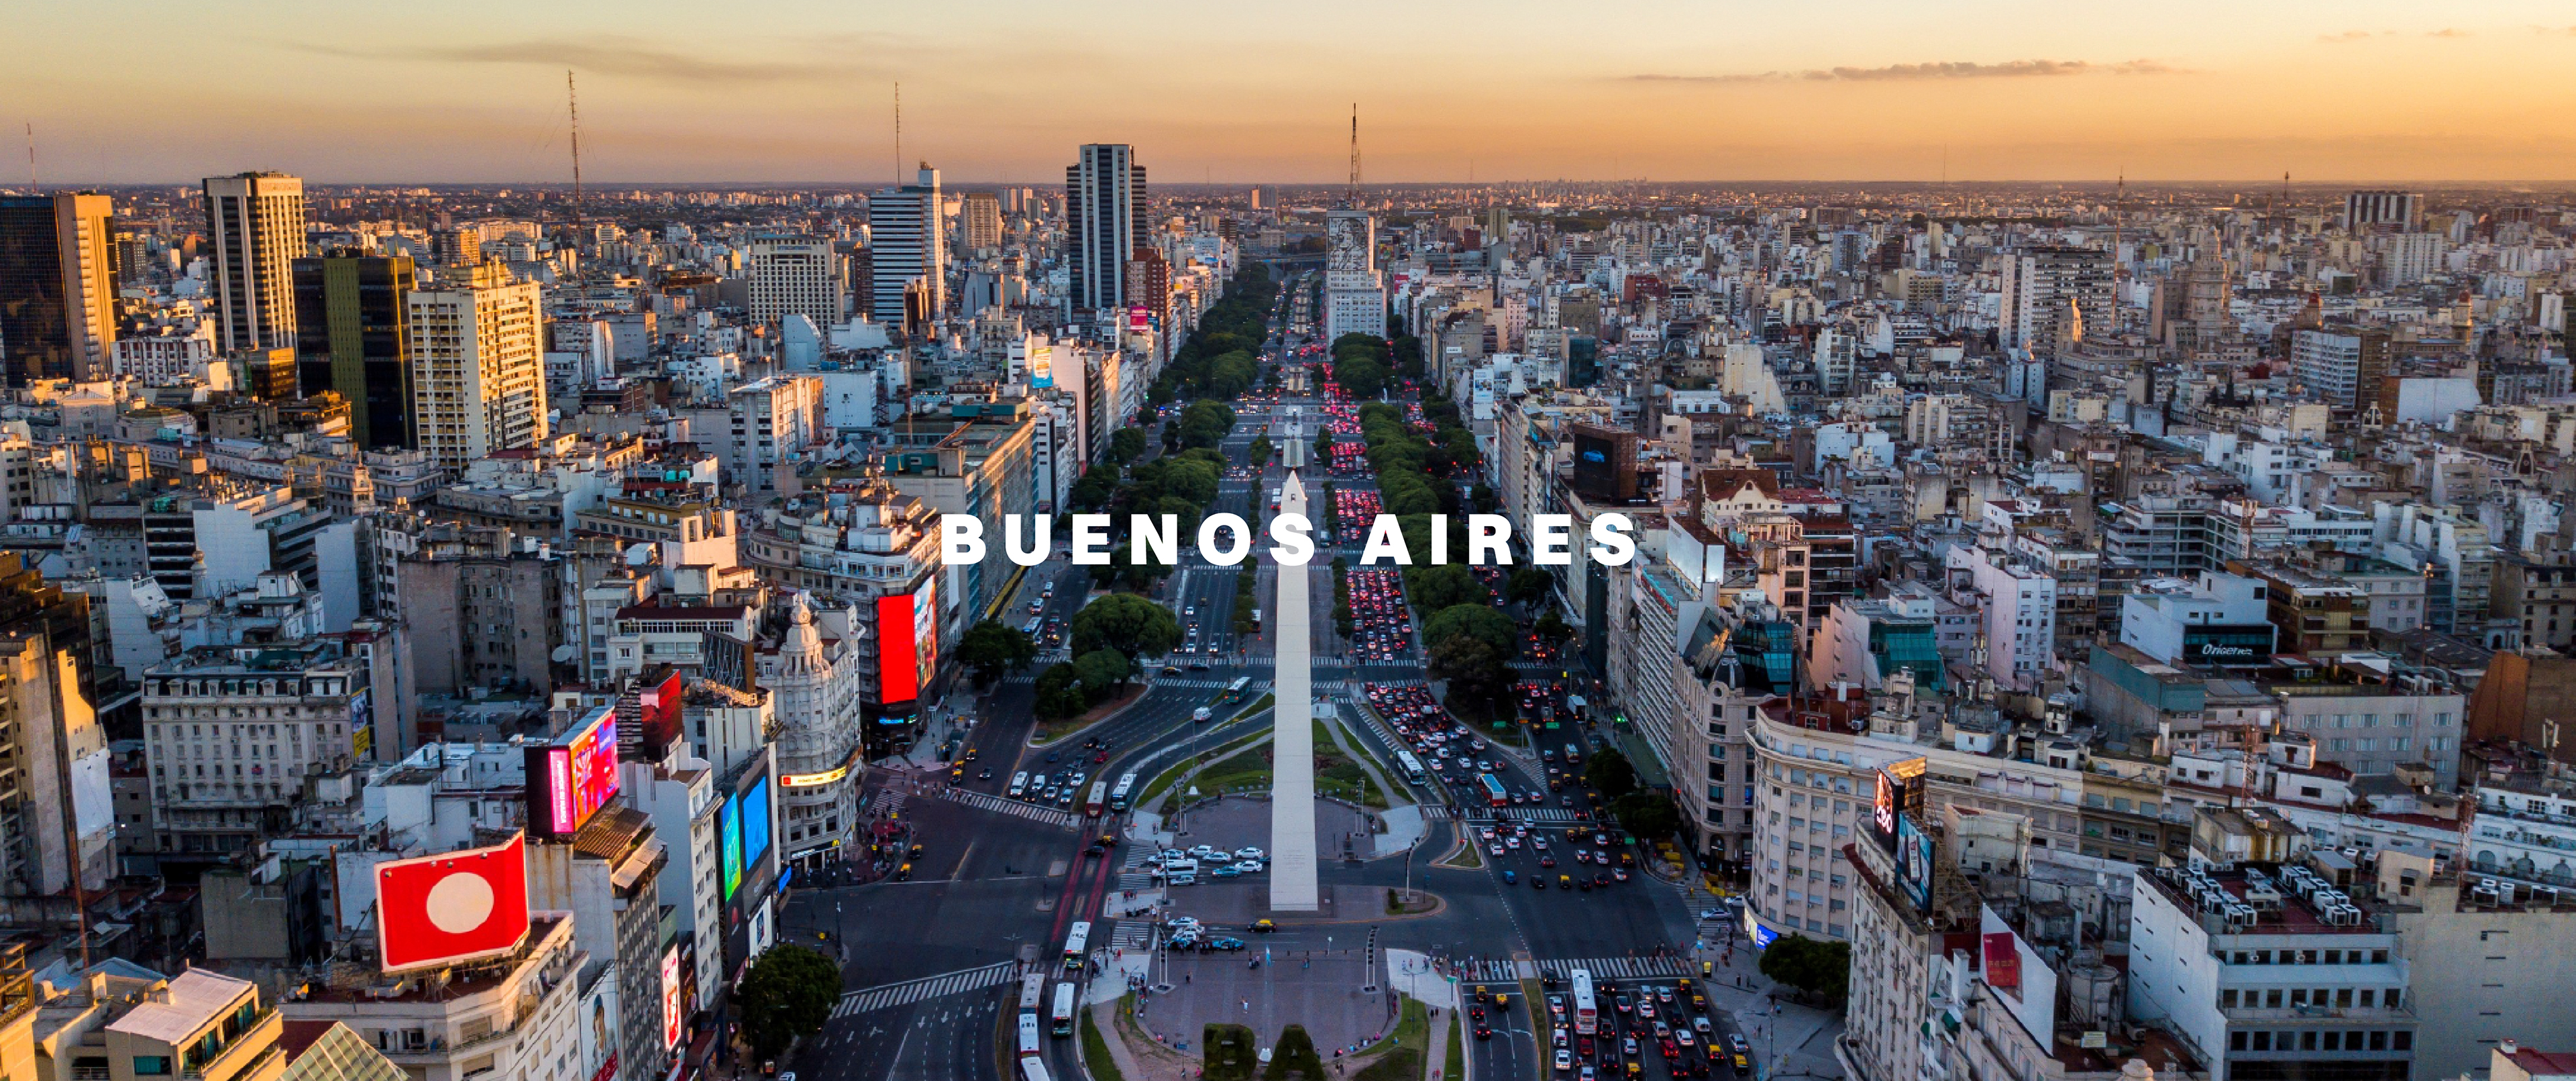 Буэнос айрес время разница. Аргентина столица Буэнос-Айрес. Аргентина Буэро Сайрес. Буэнос Айрес агломерация. Буэнос Айрес небоскребы.